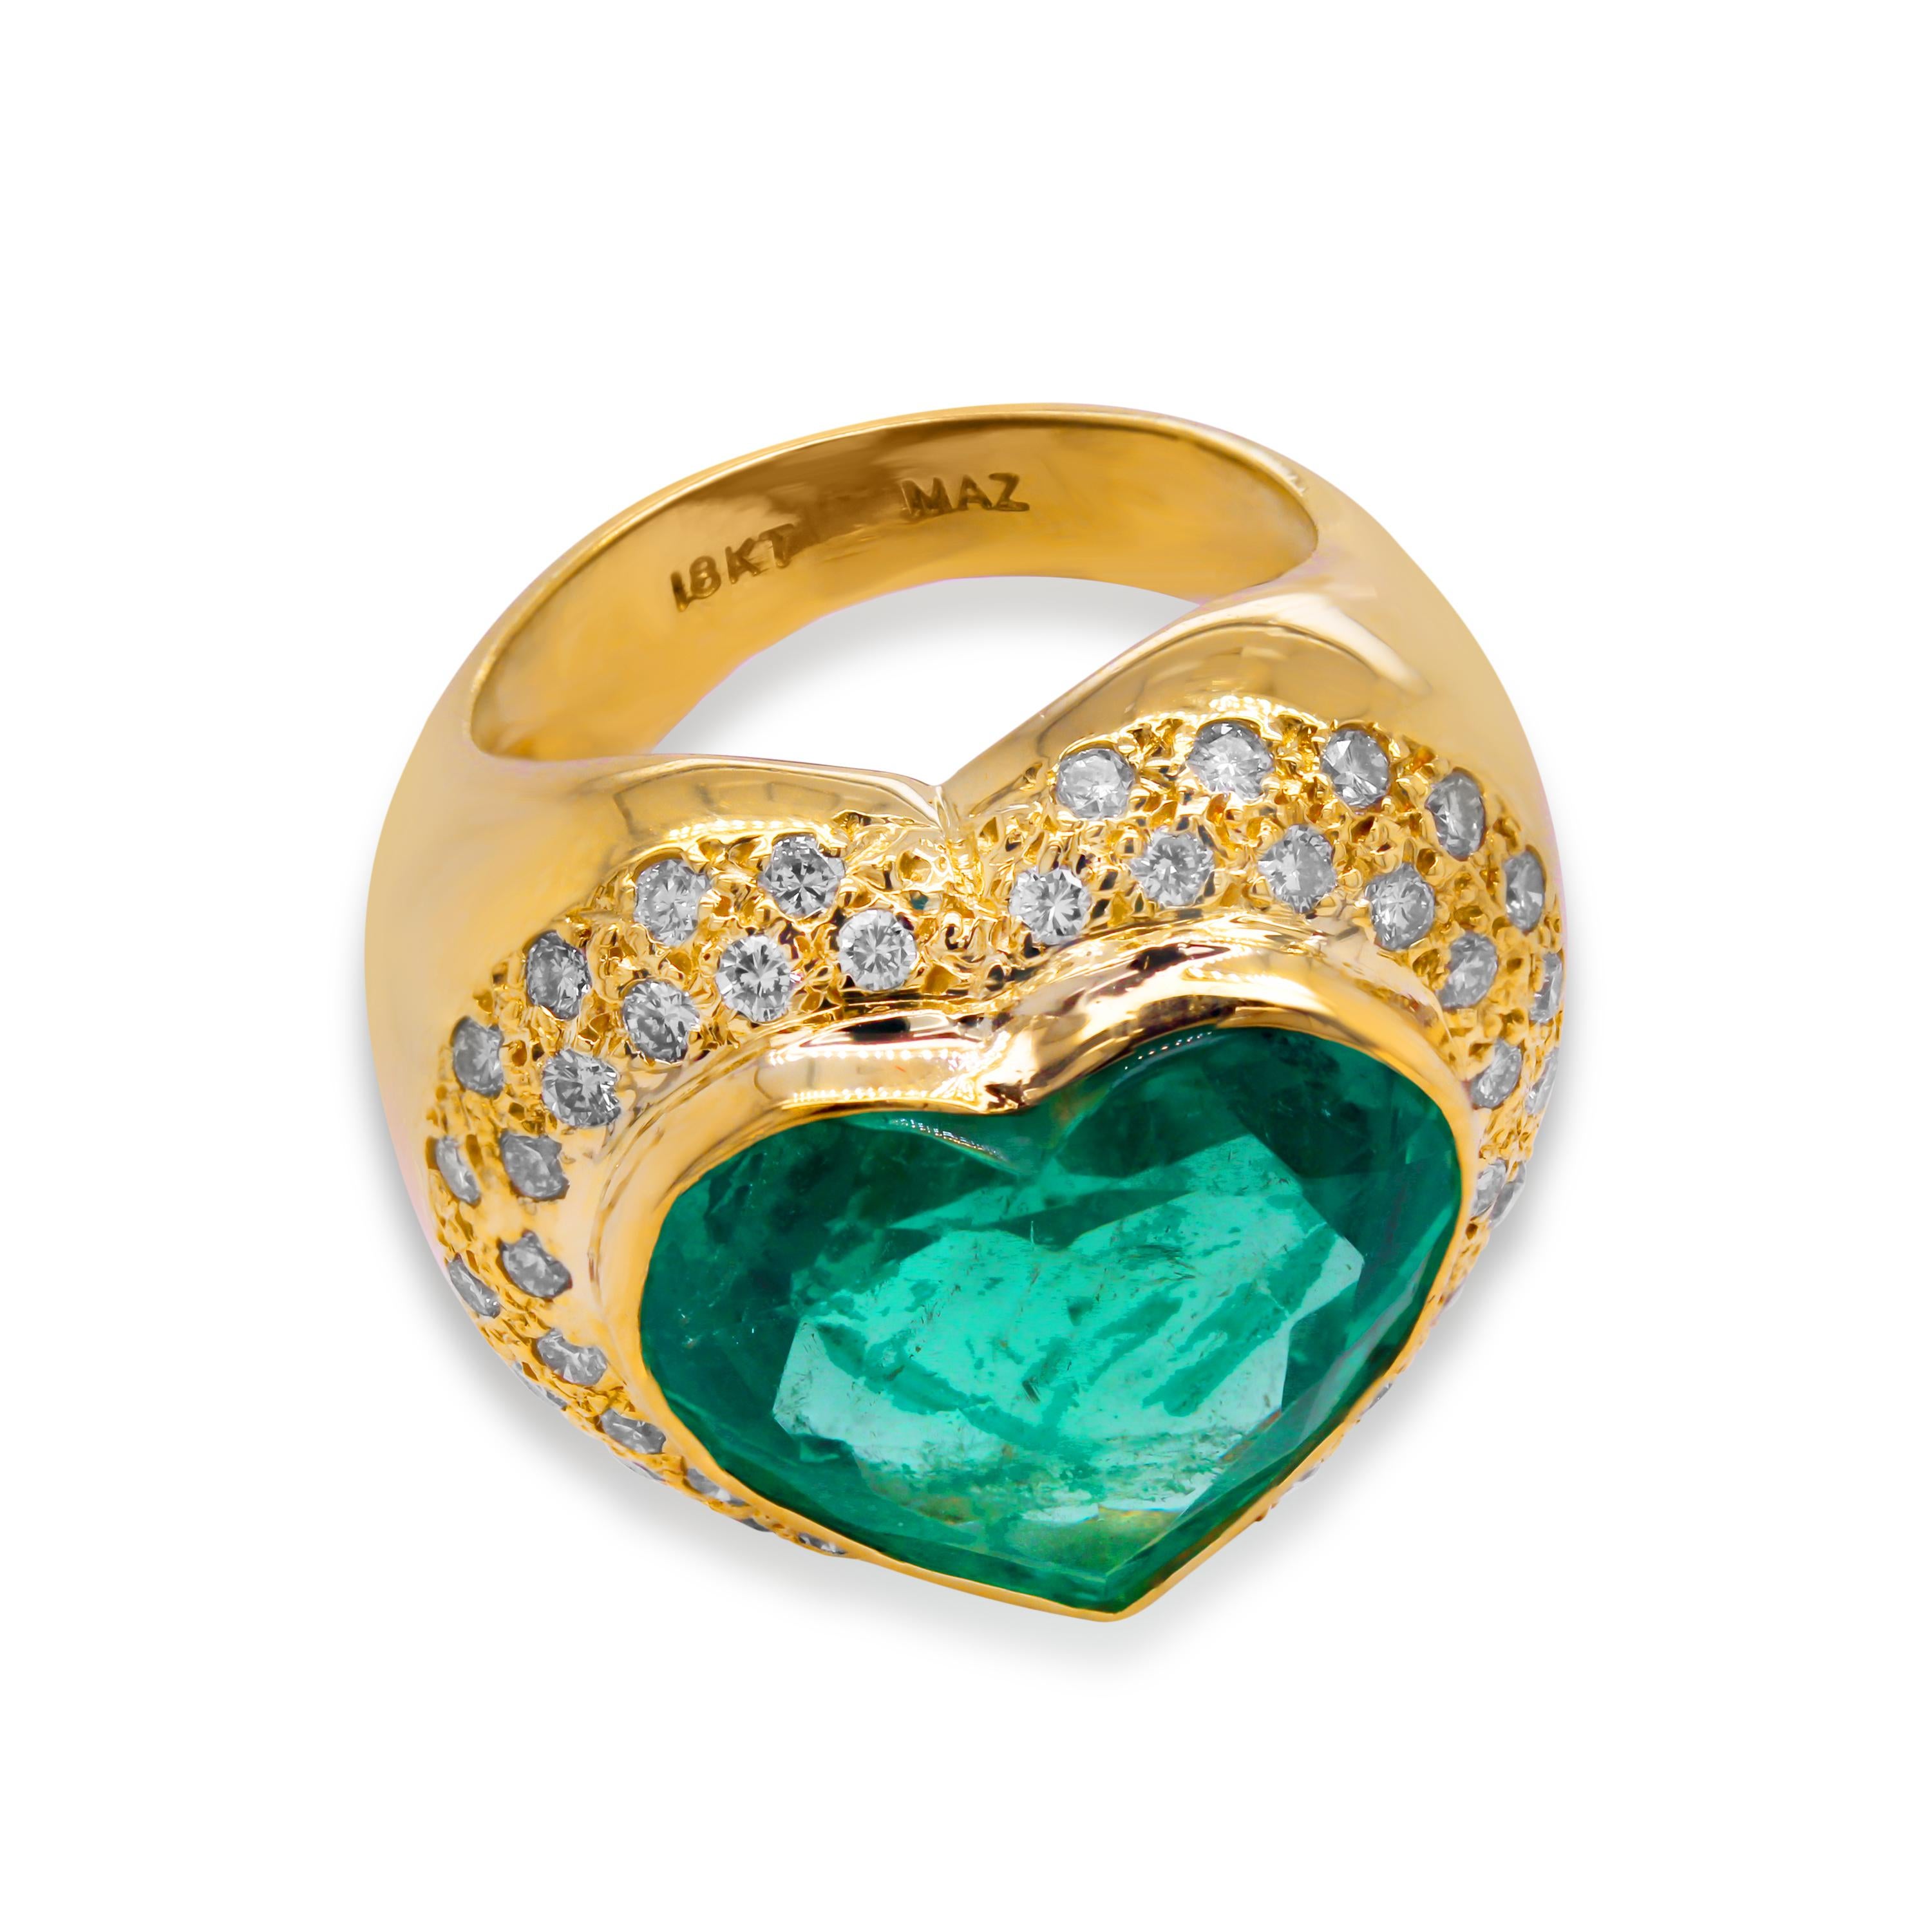 heart shaped emerald